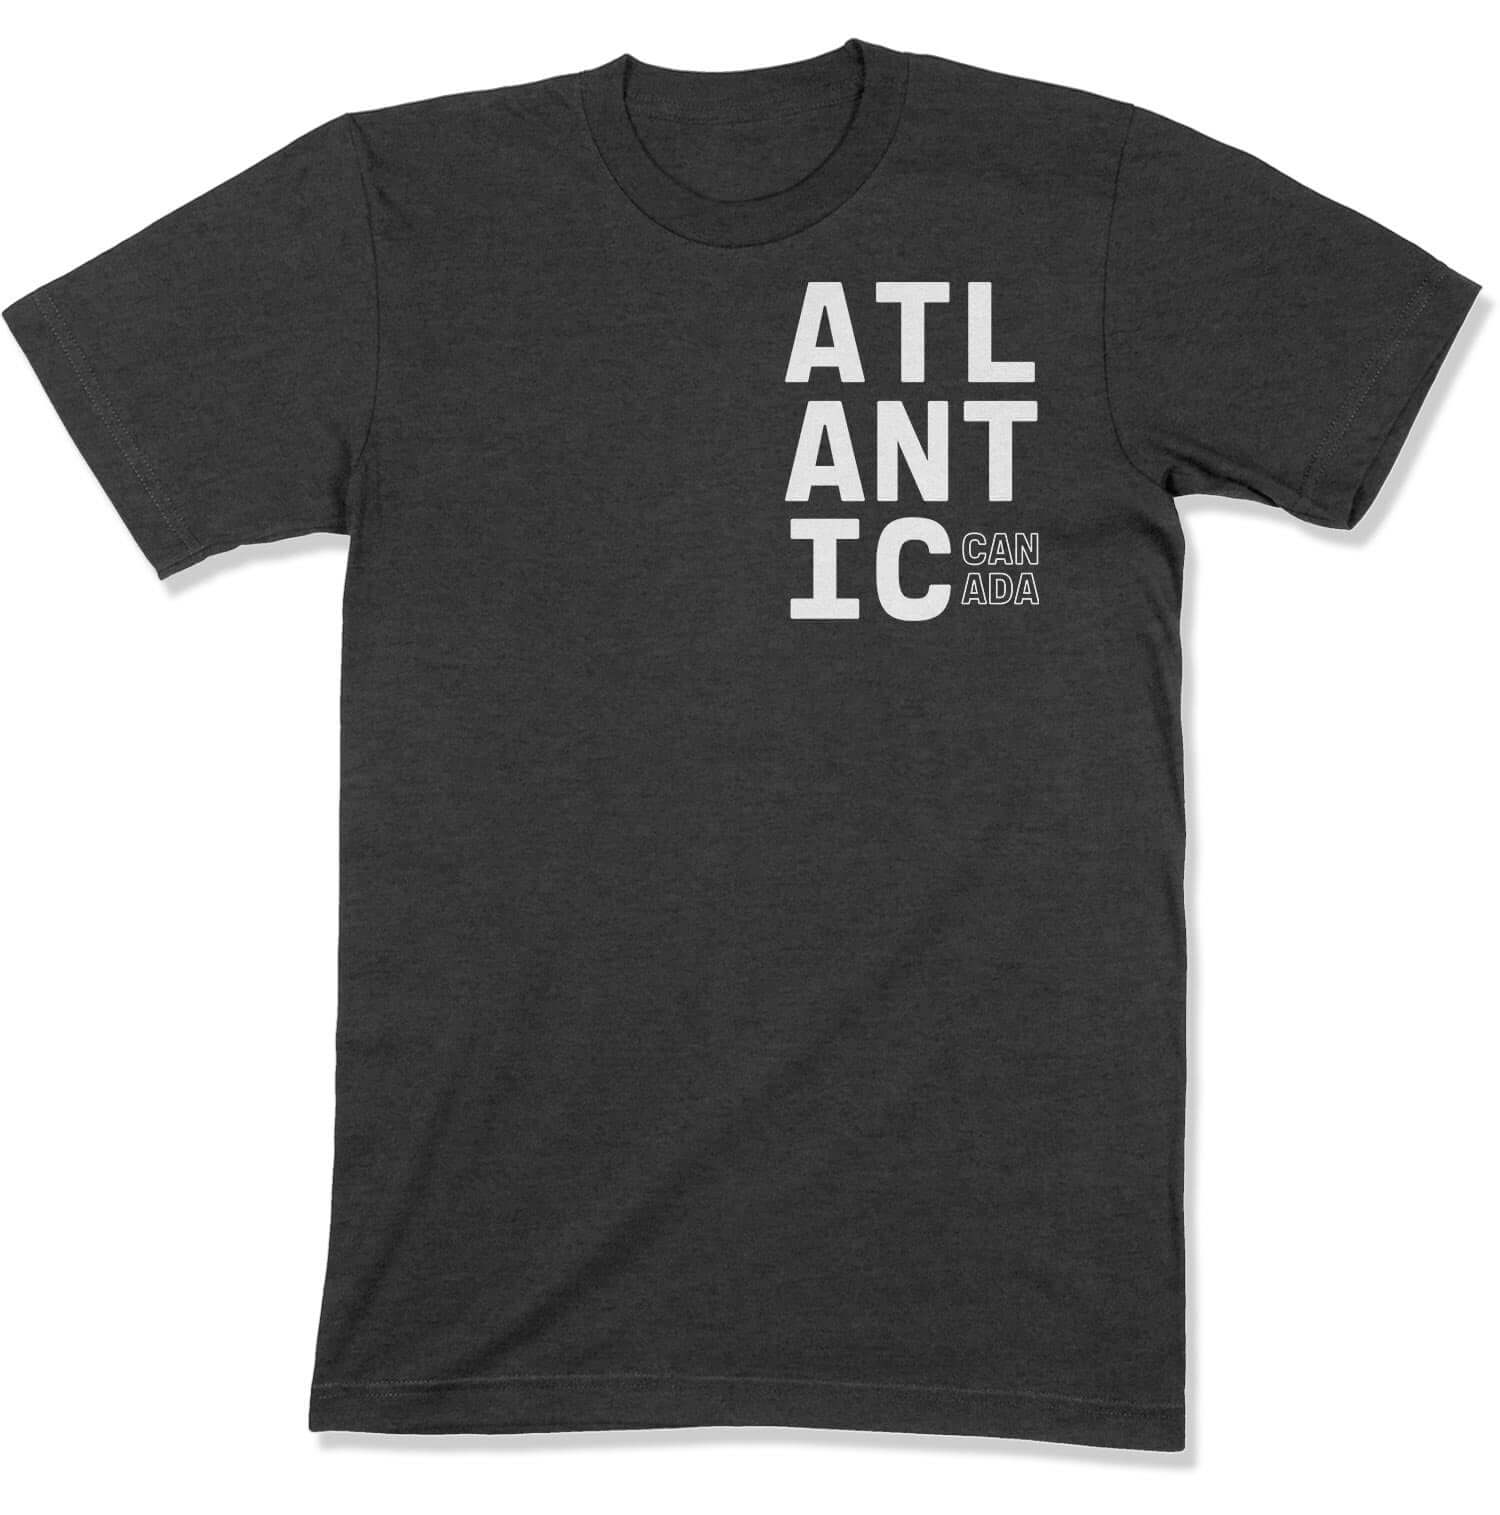 Atlantic Canada Unisex T-Shirt in Color: Dark Grey Heather w/ White Text - East Coast AF Apparel